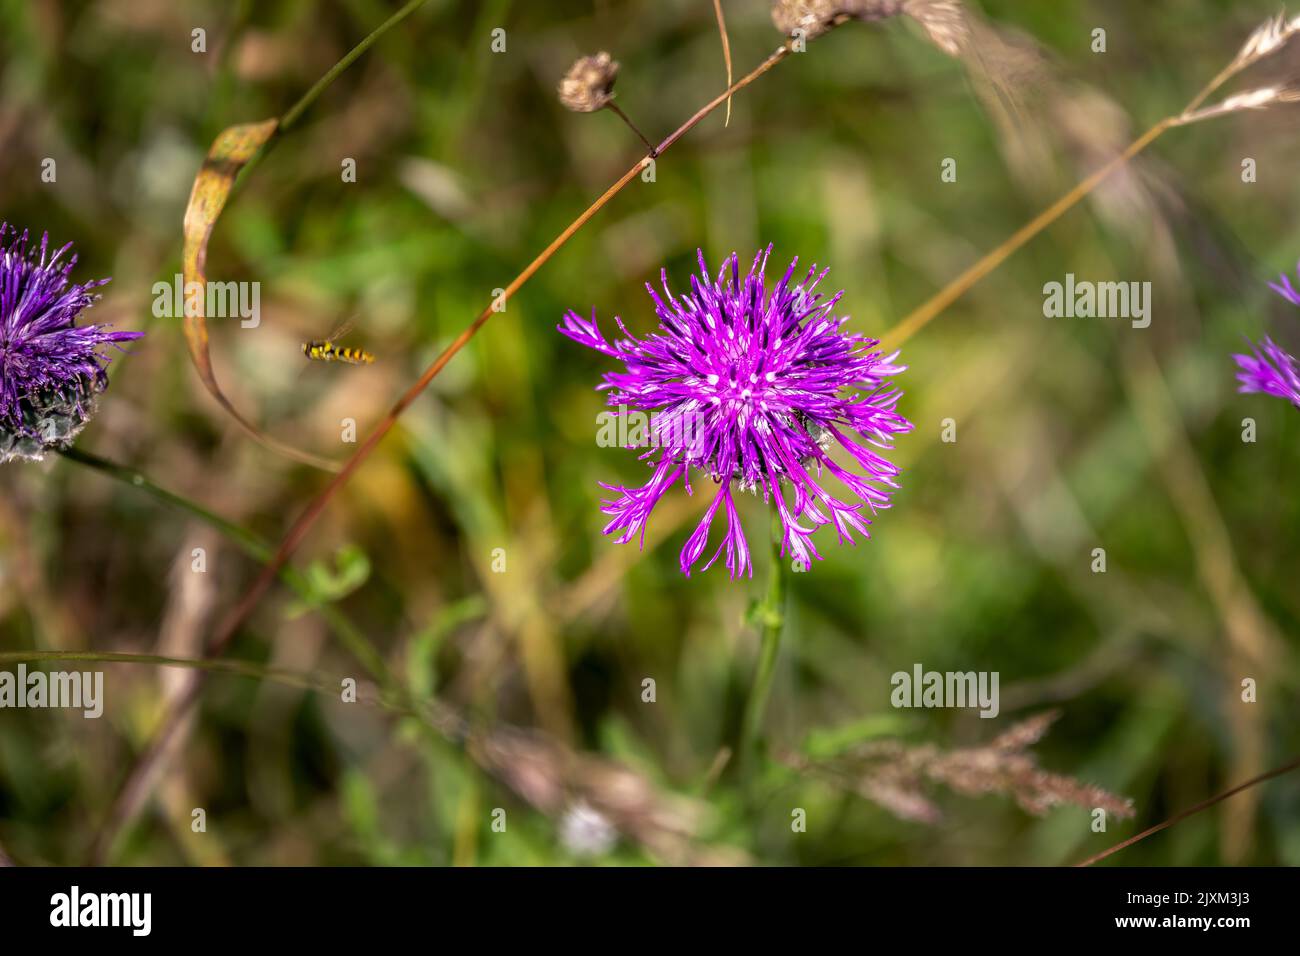 Purple flower of Centaurea scabiosa L. or Greater Knapweed, close up Stock Photo